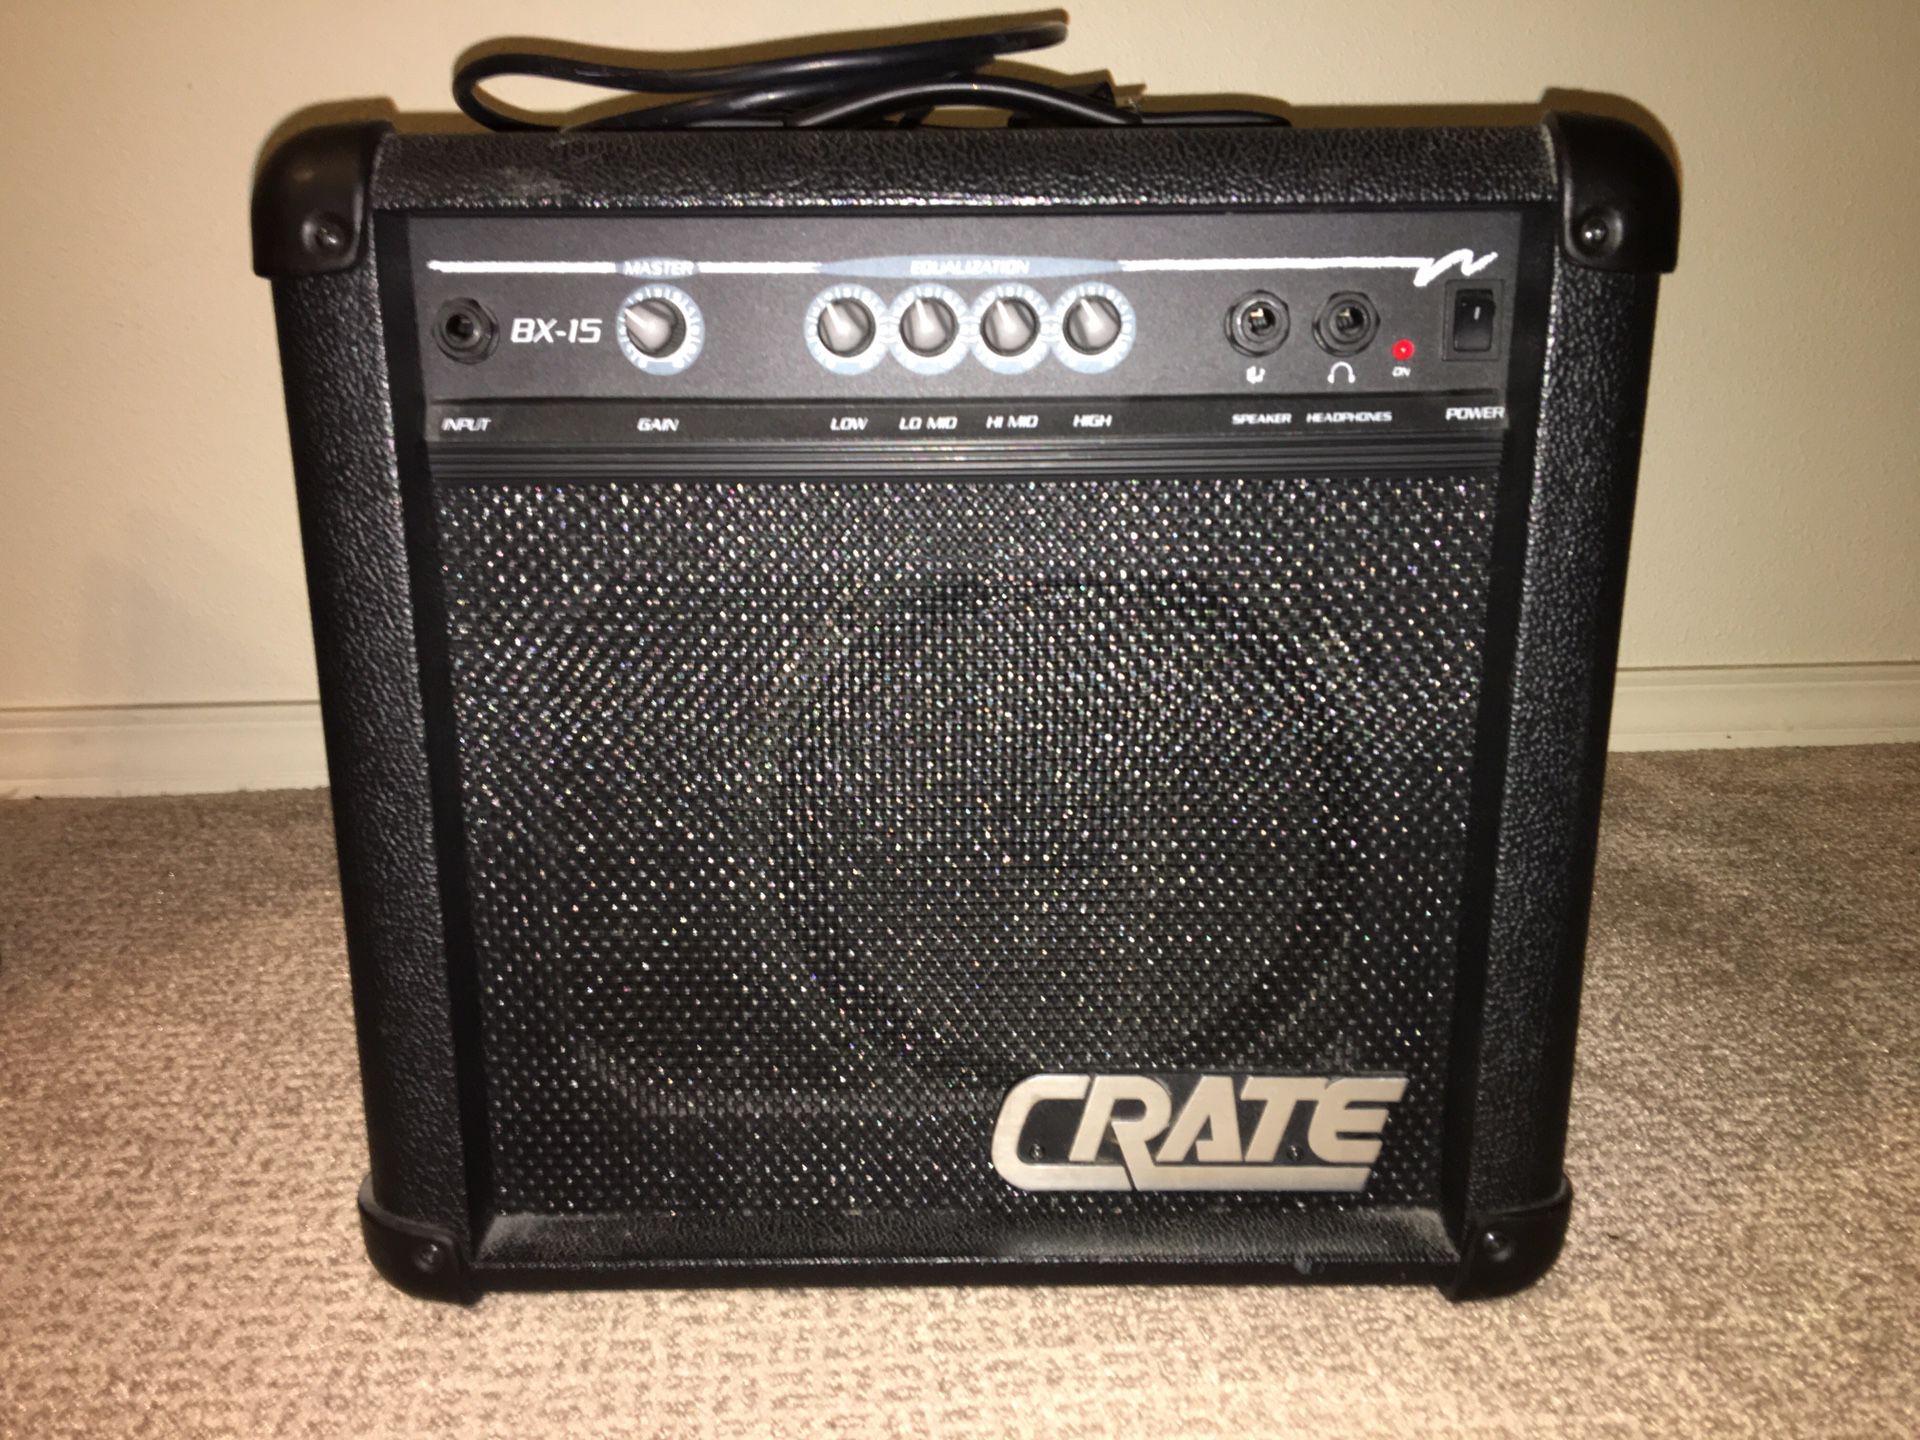 Crate BX-15 amplifier